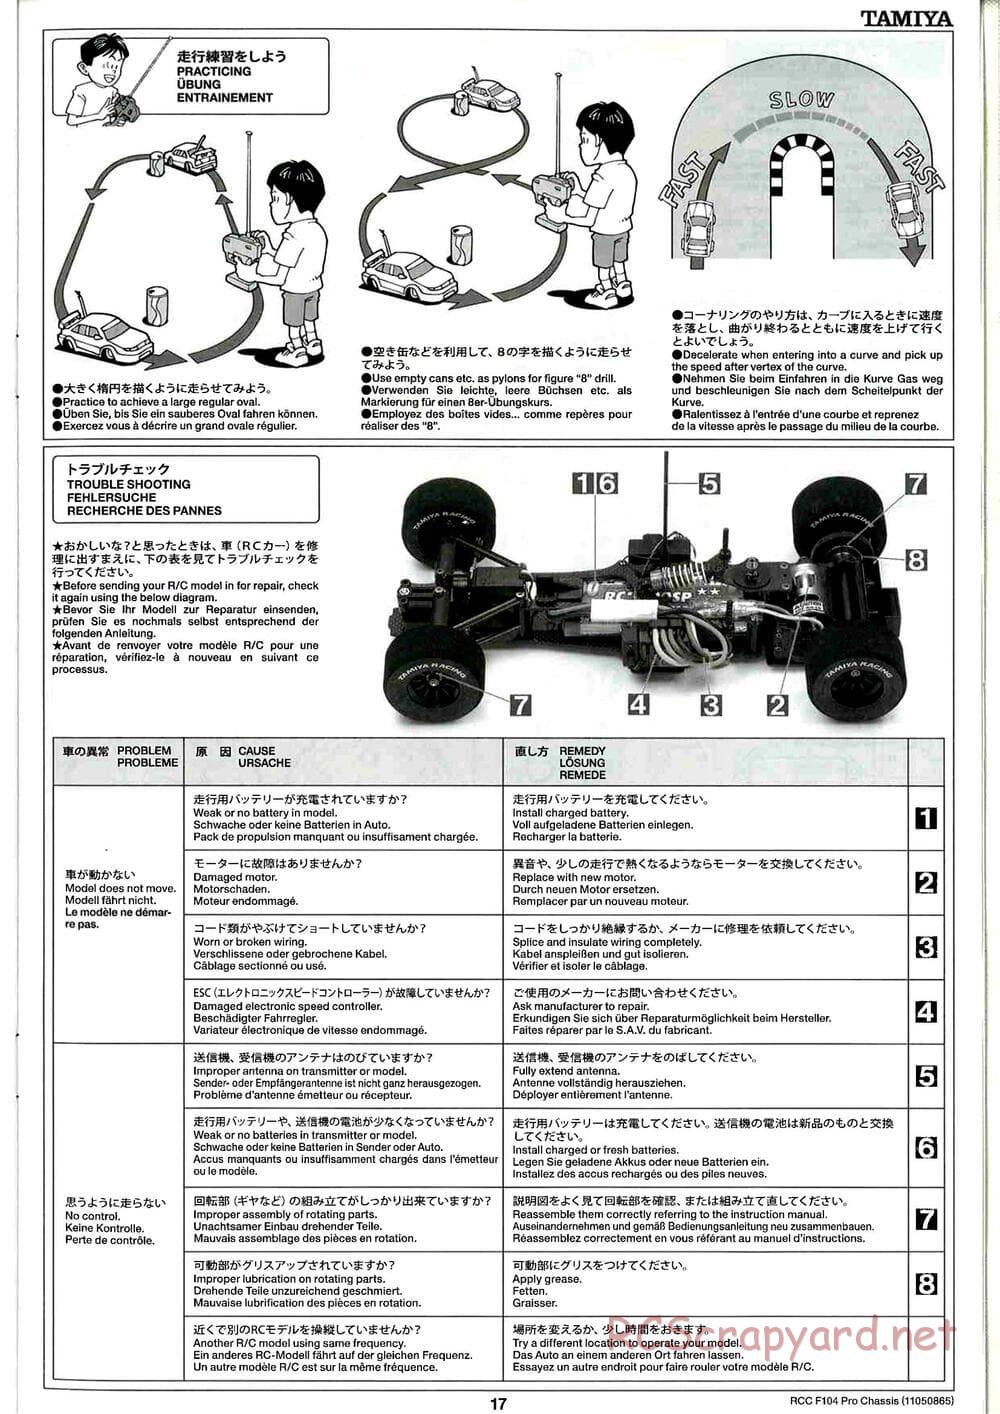 Tamiya - F104 Pro Chassis - Manual - Page 17